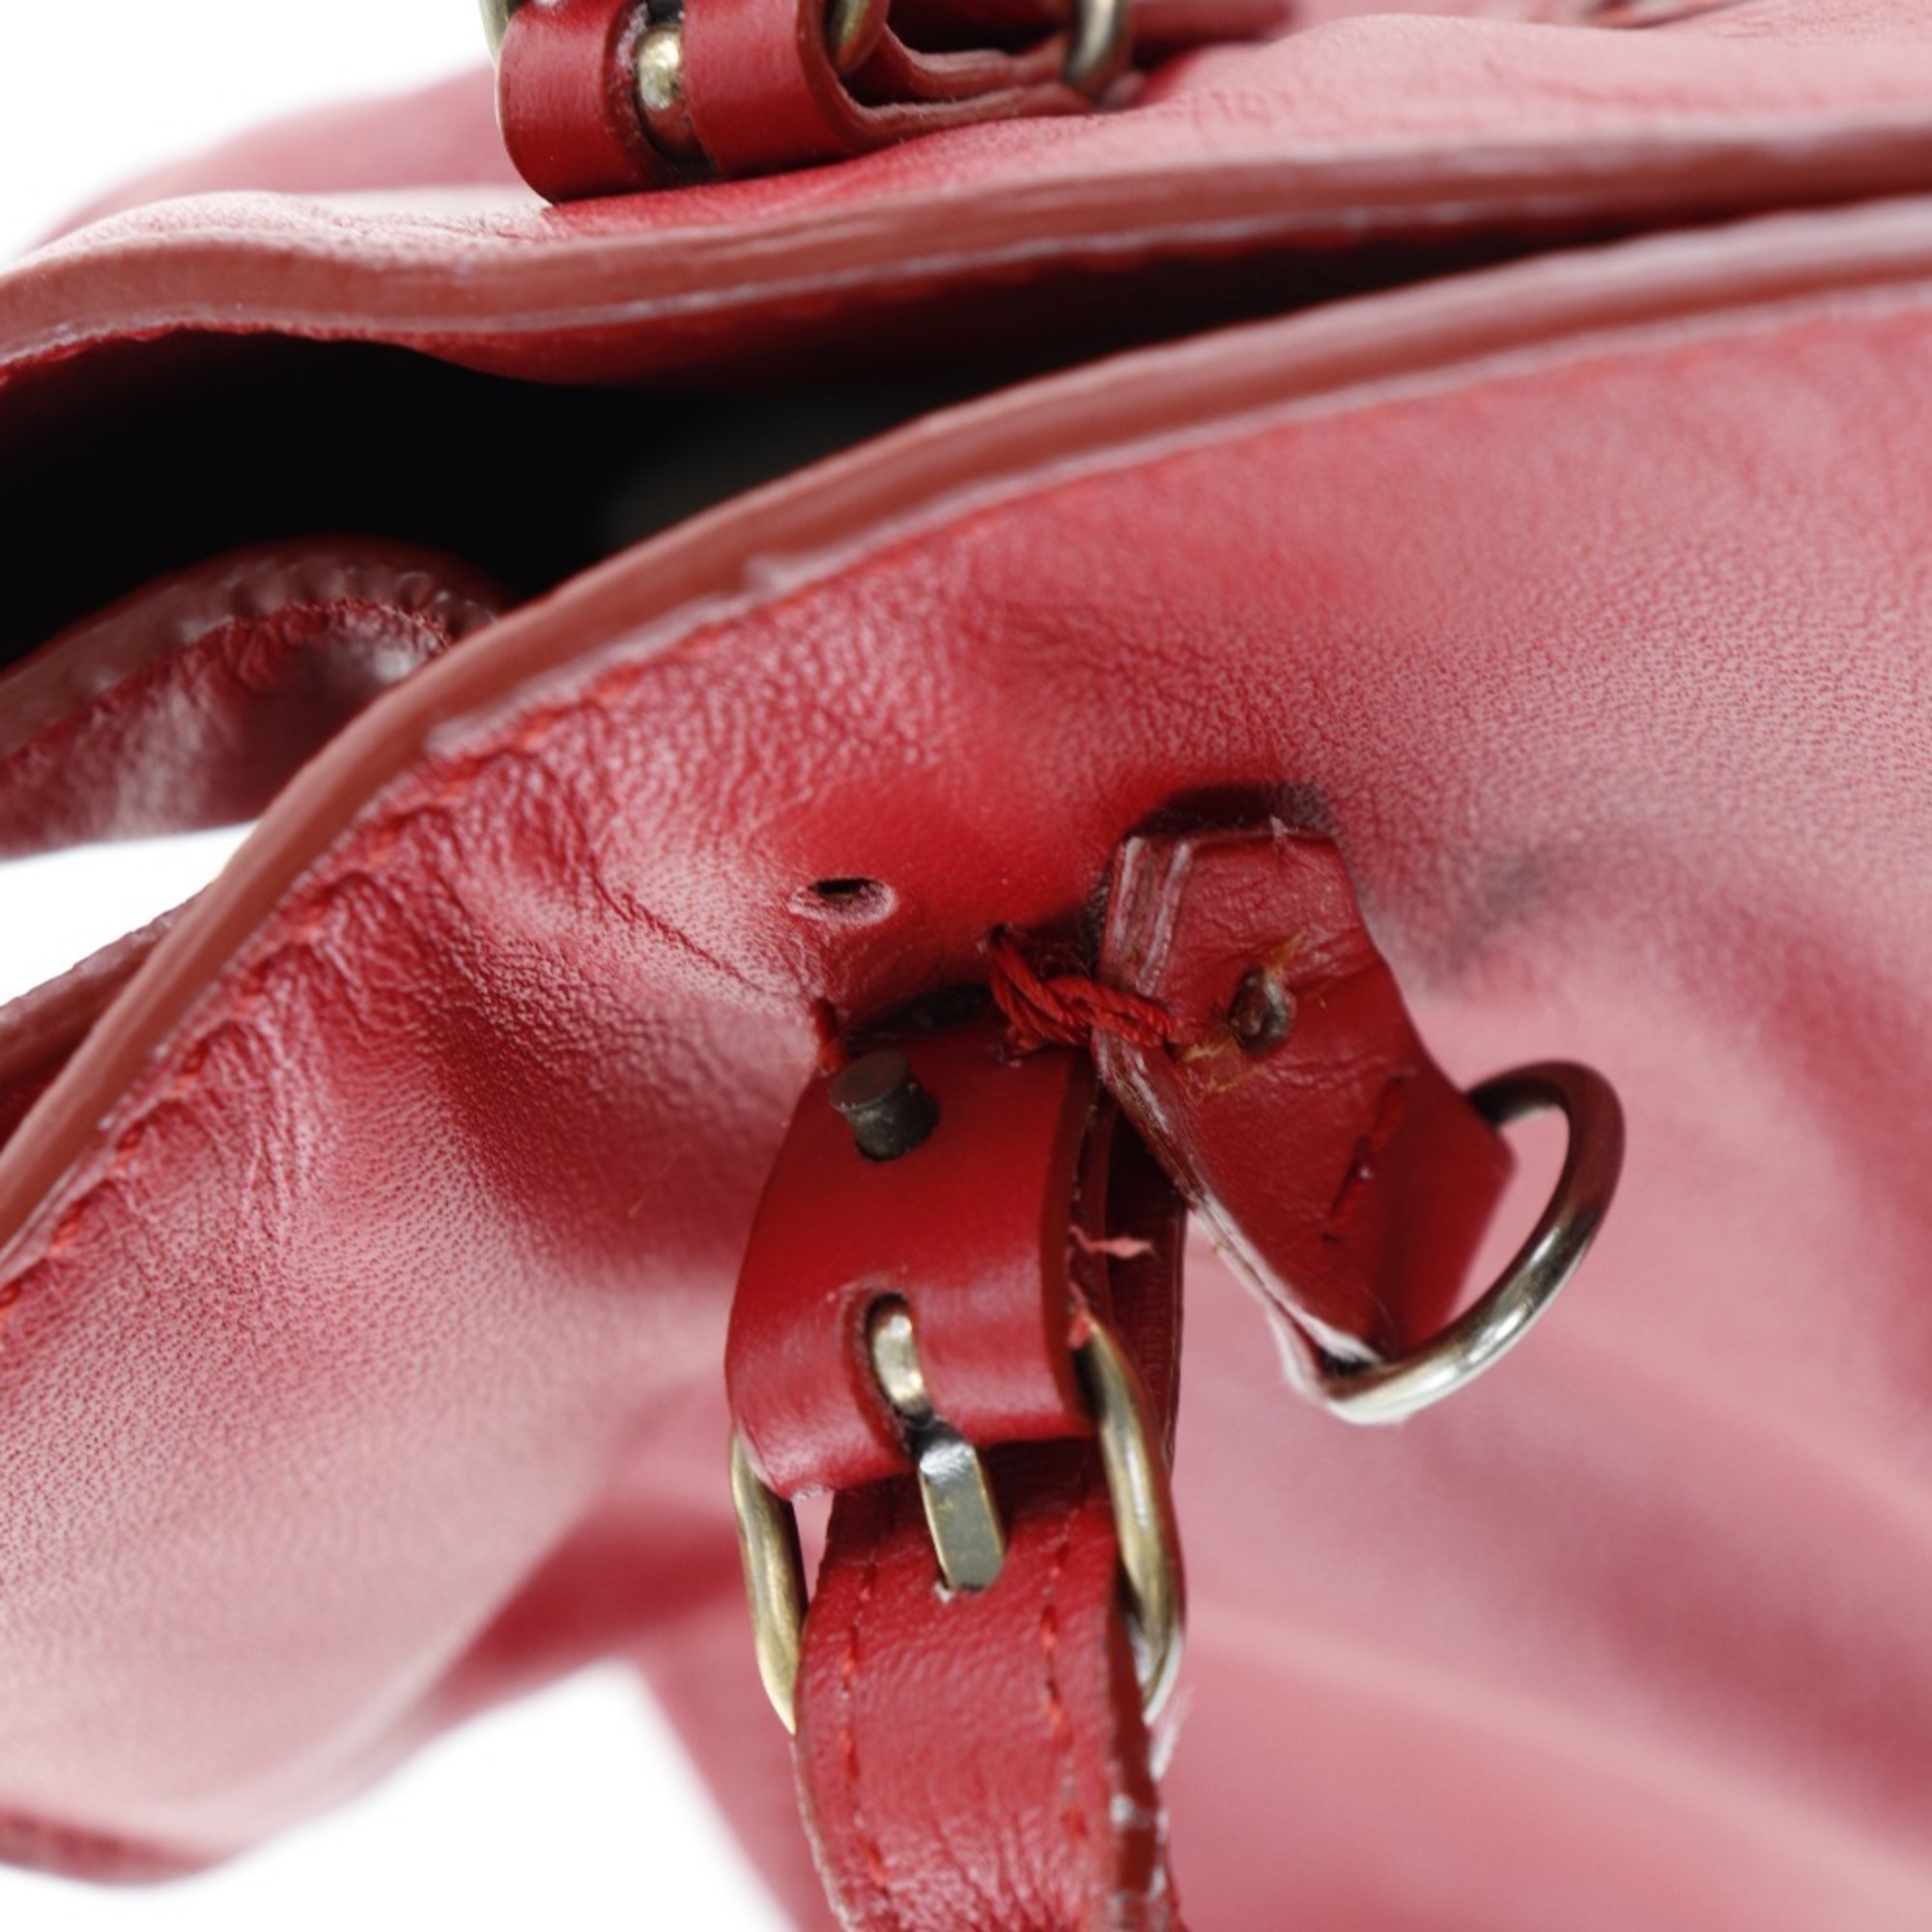 BALENCIAGA Balenciaga paper mini 2WAY shoulder 305572 calf red ladies handbag